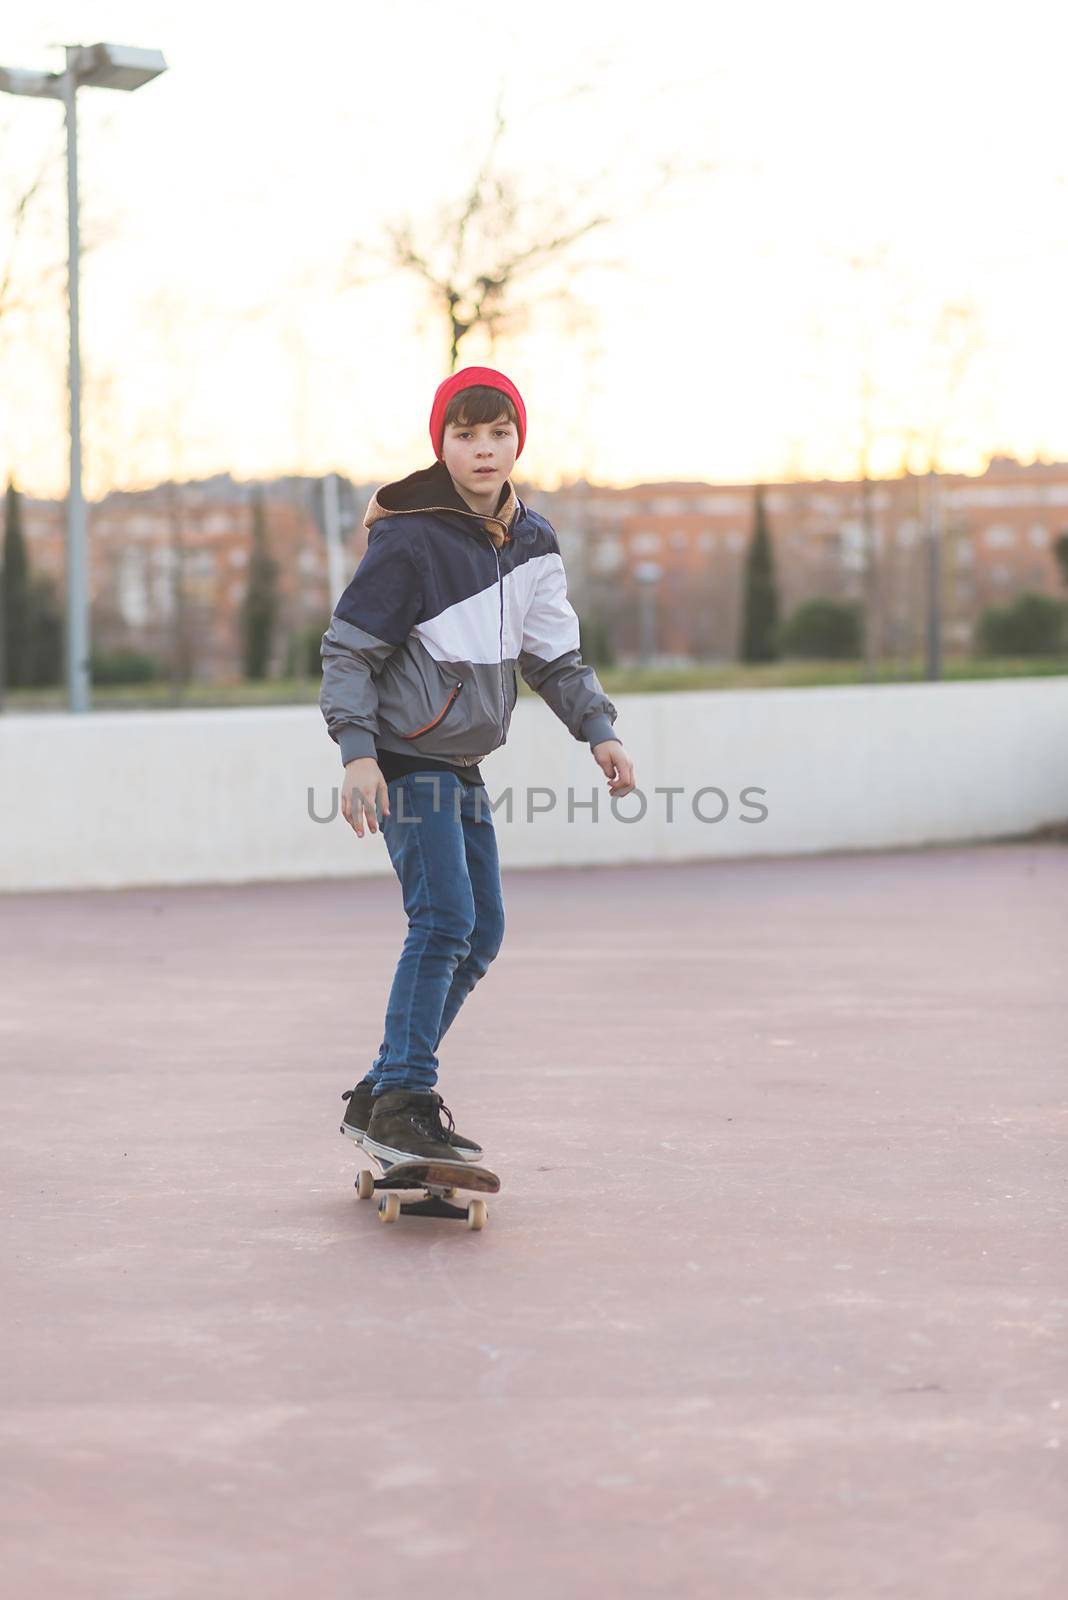 Teenager skateboarder boy with a skateboard on asphalt playground doing tricks. by raferto1973